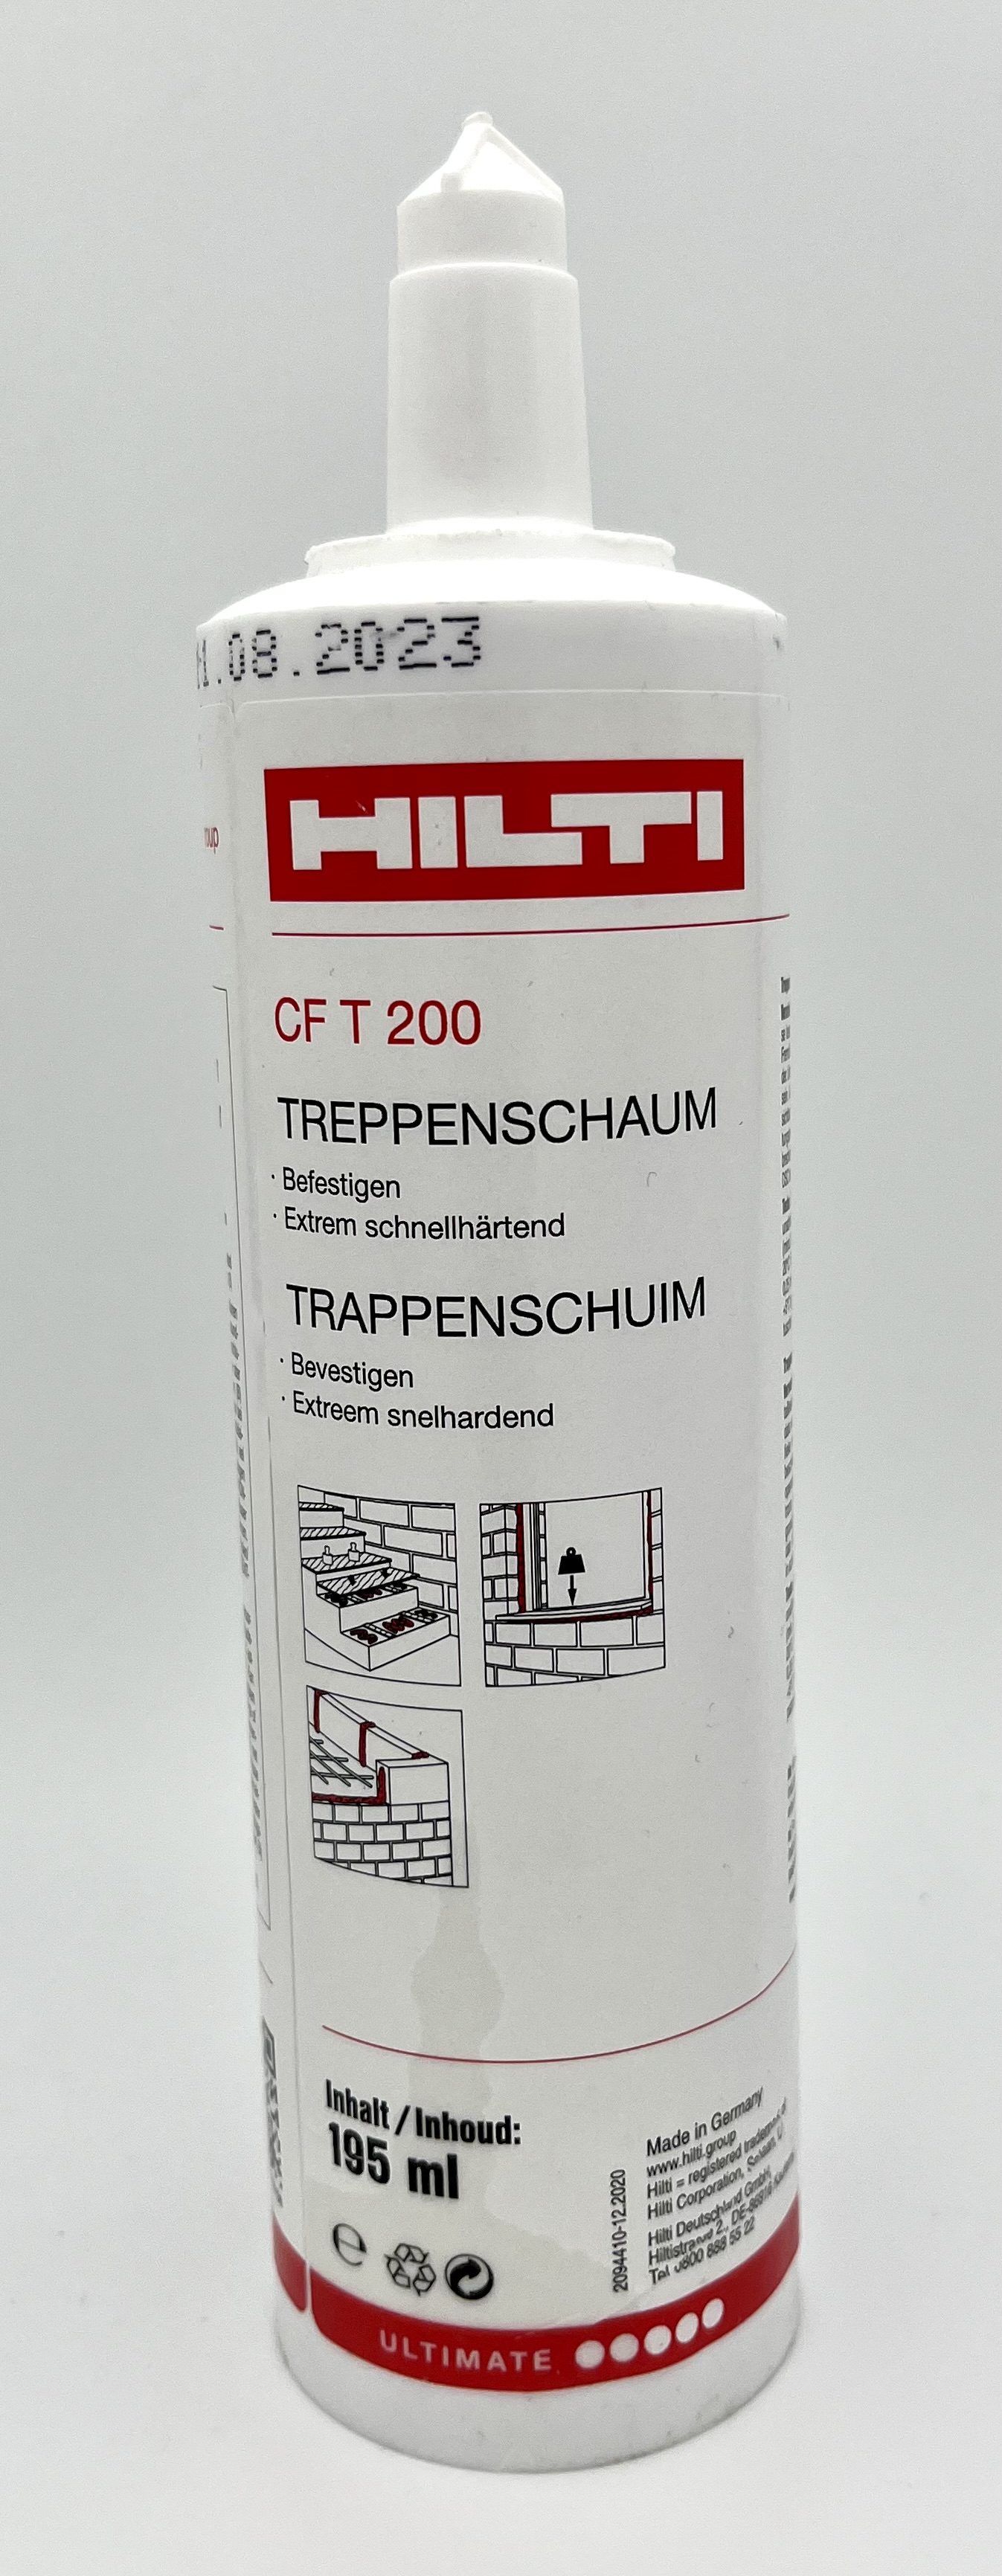 Treppenschaum CF T 200, 195 ml